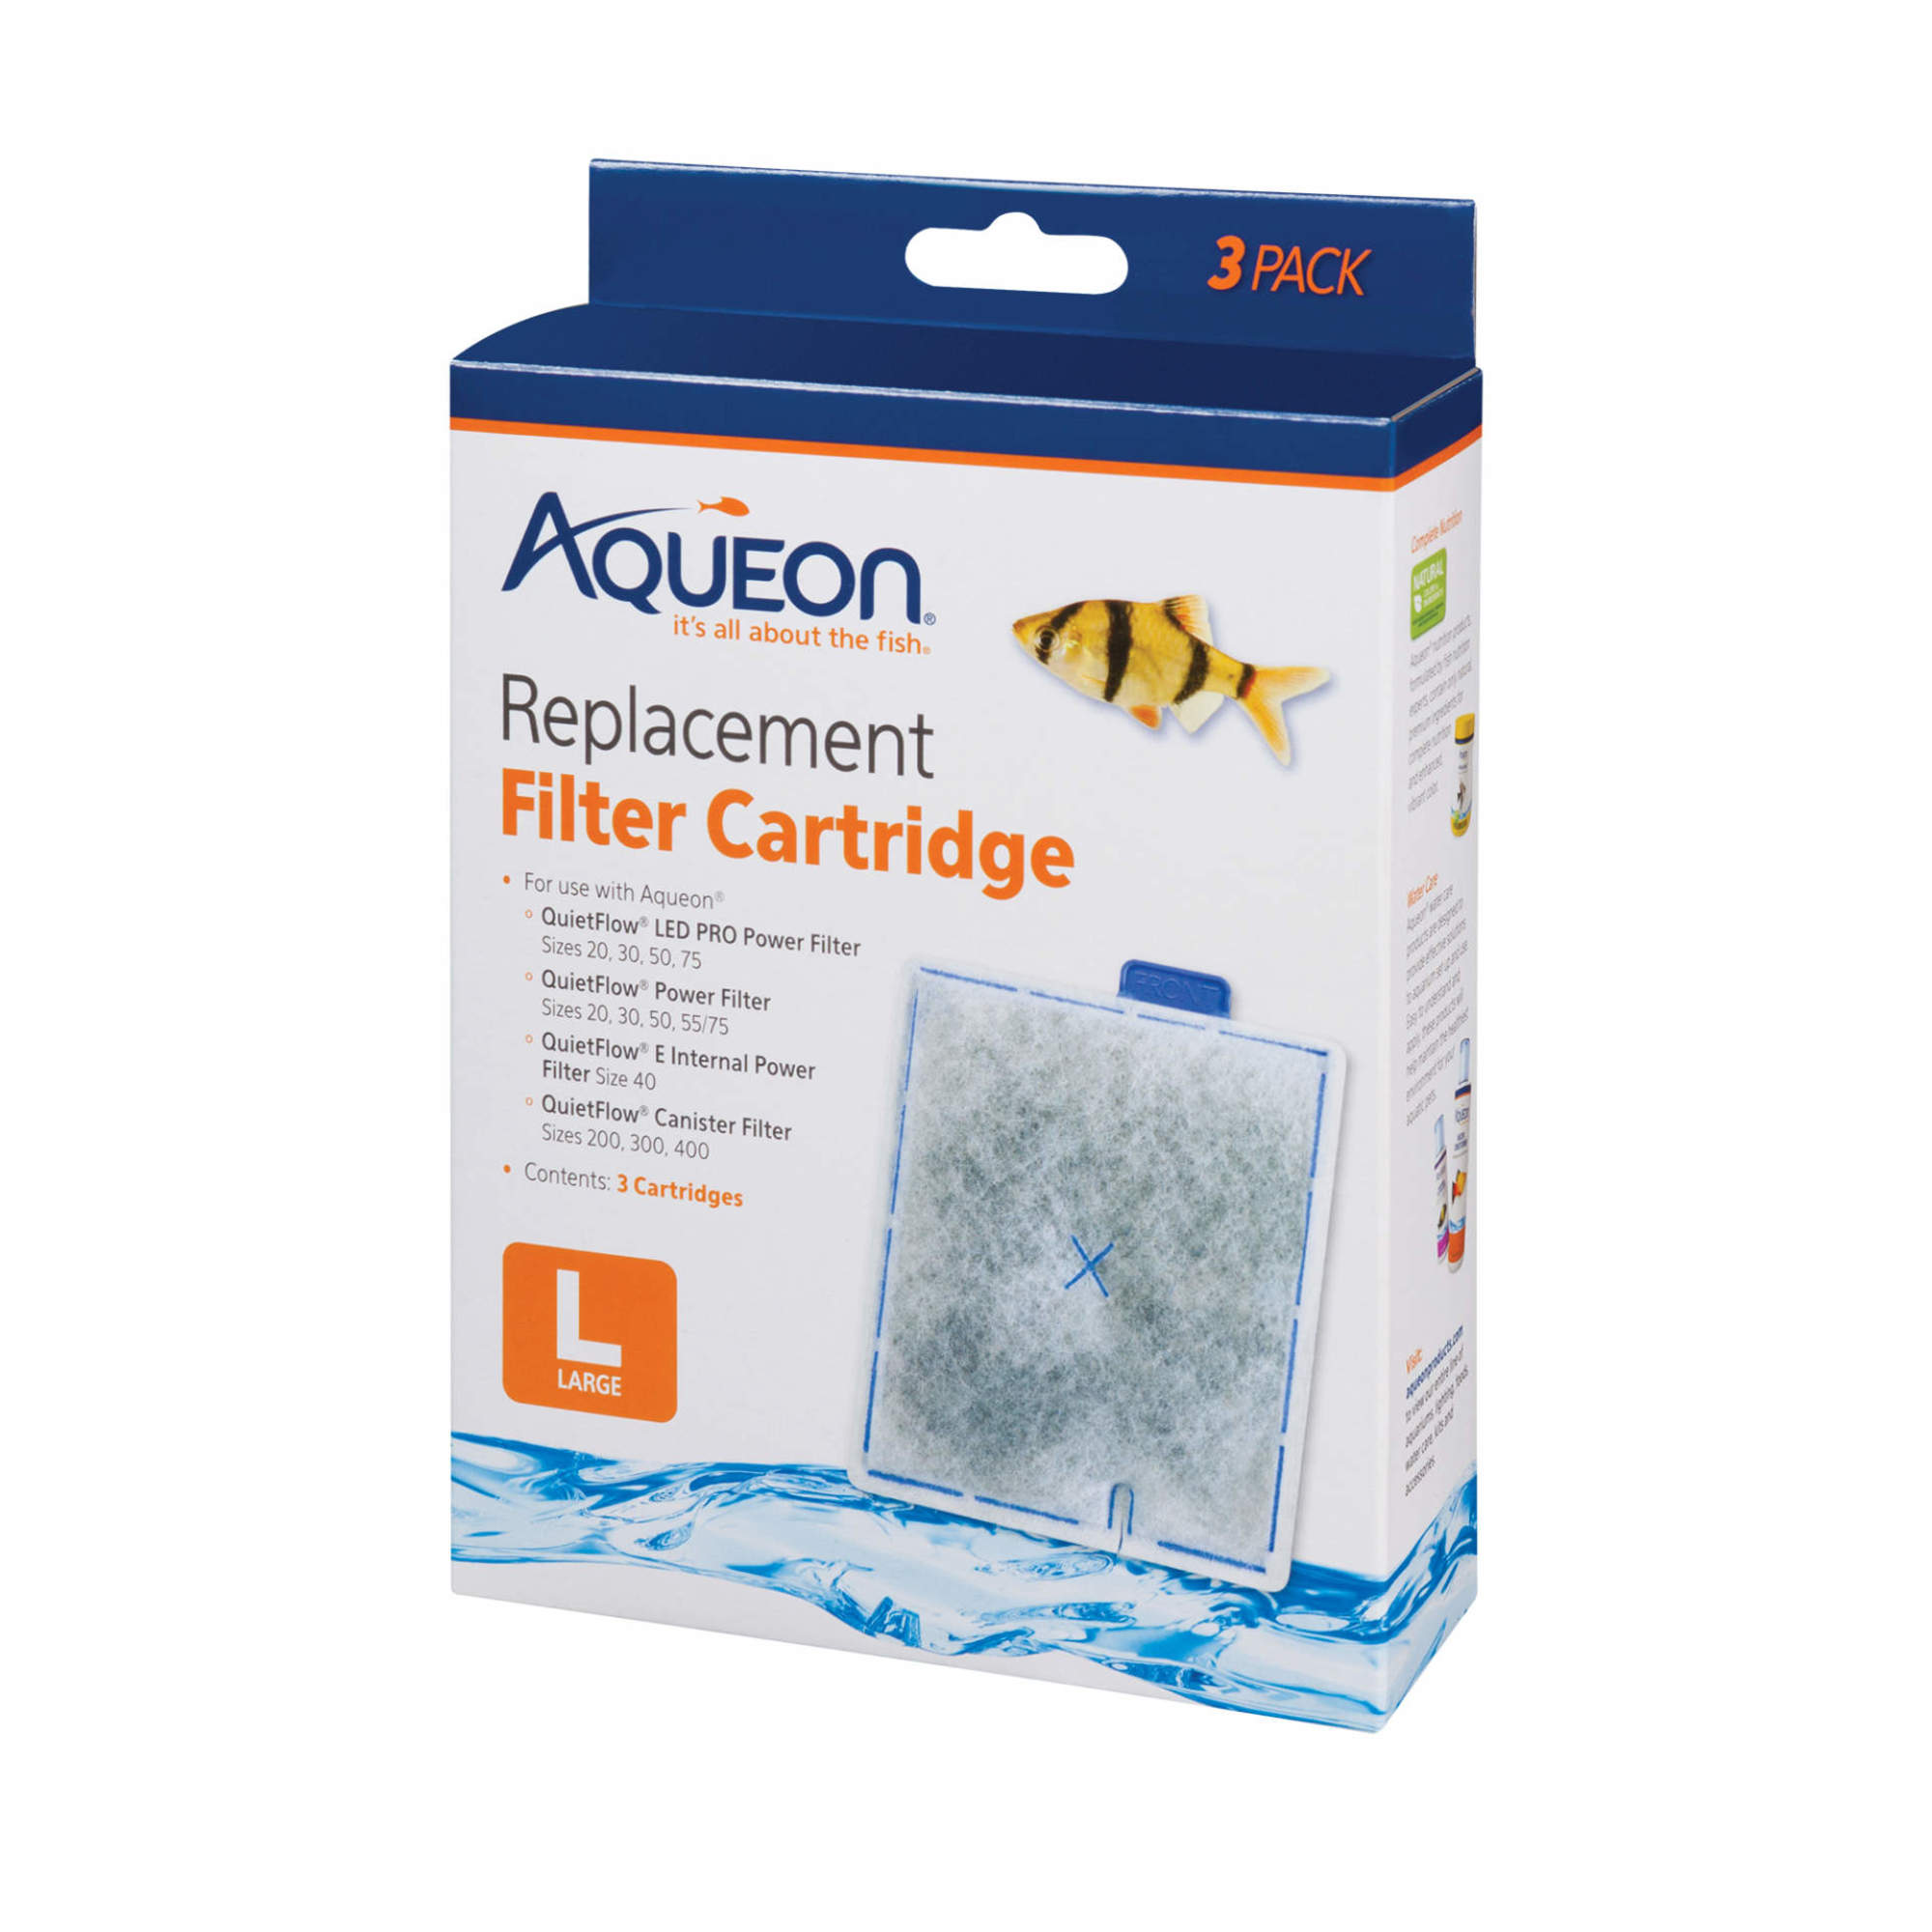 Photos - Aquarium Filter Aqueon Replacement Filter Cartridges, Large, Pack of 3, 3 CT 100106 